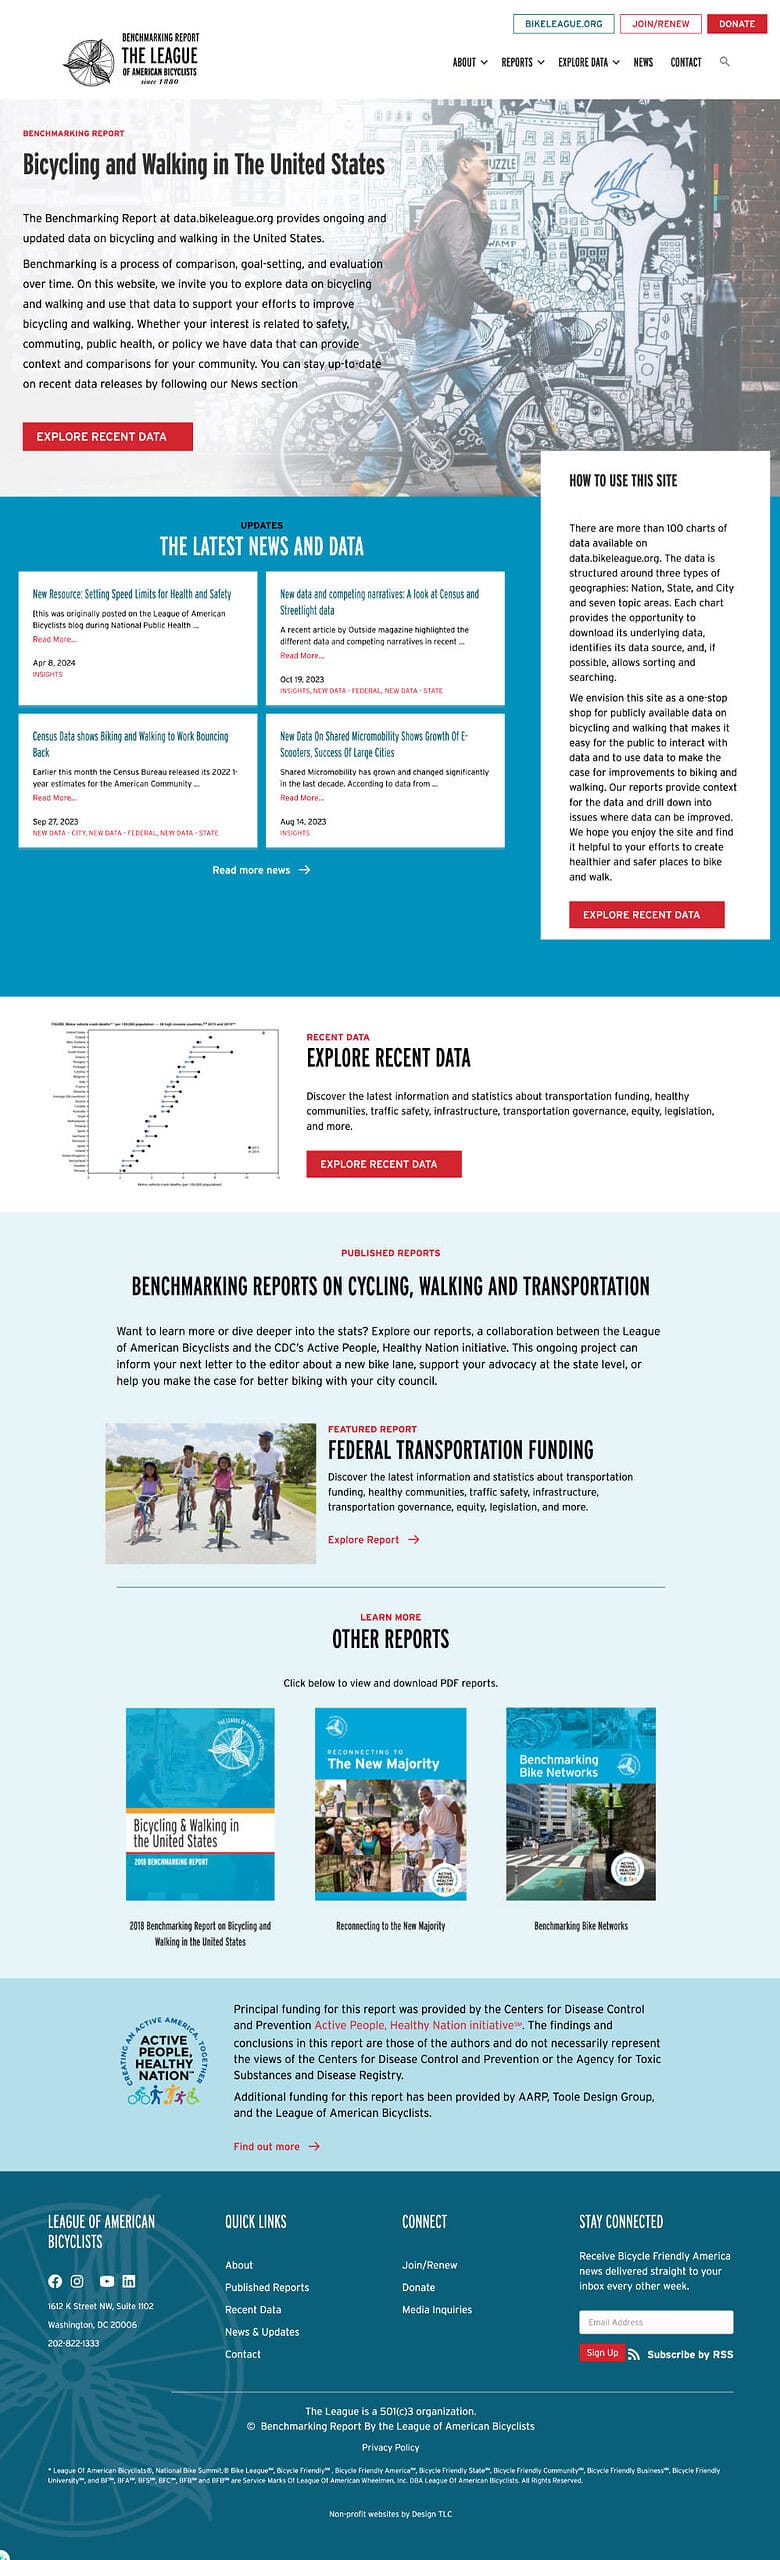 new website for Bike League data